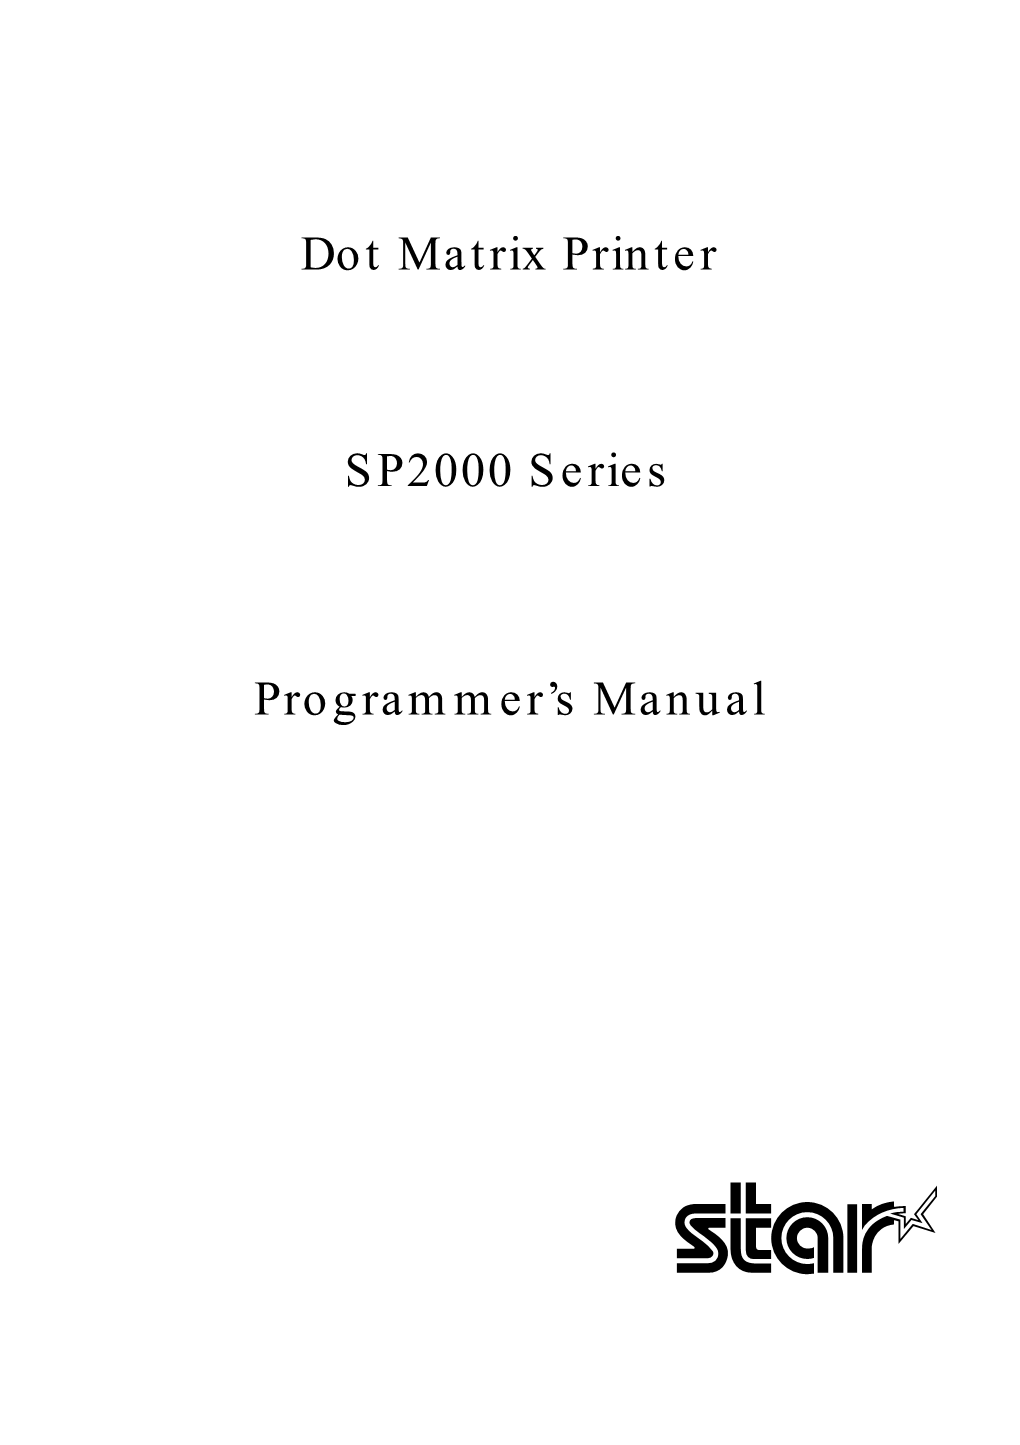 Programmer's Manual SP2000 Series